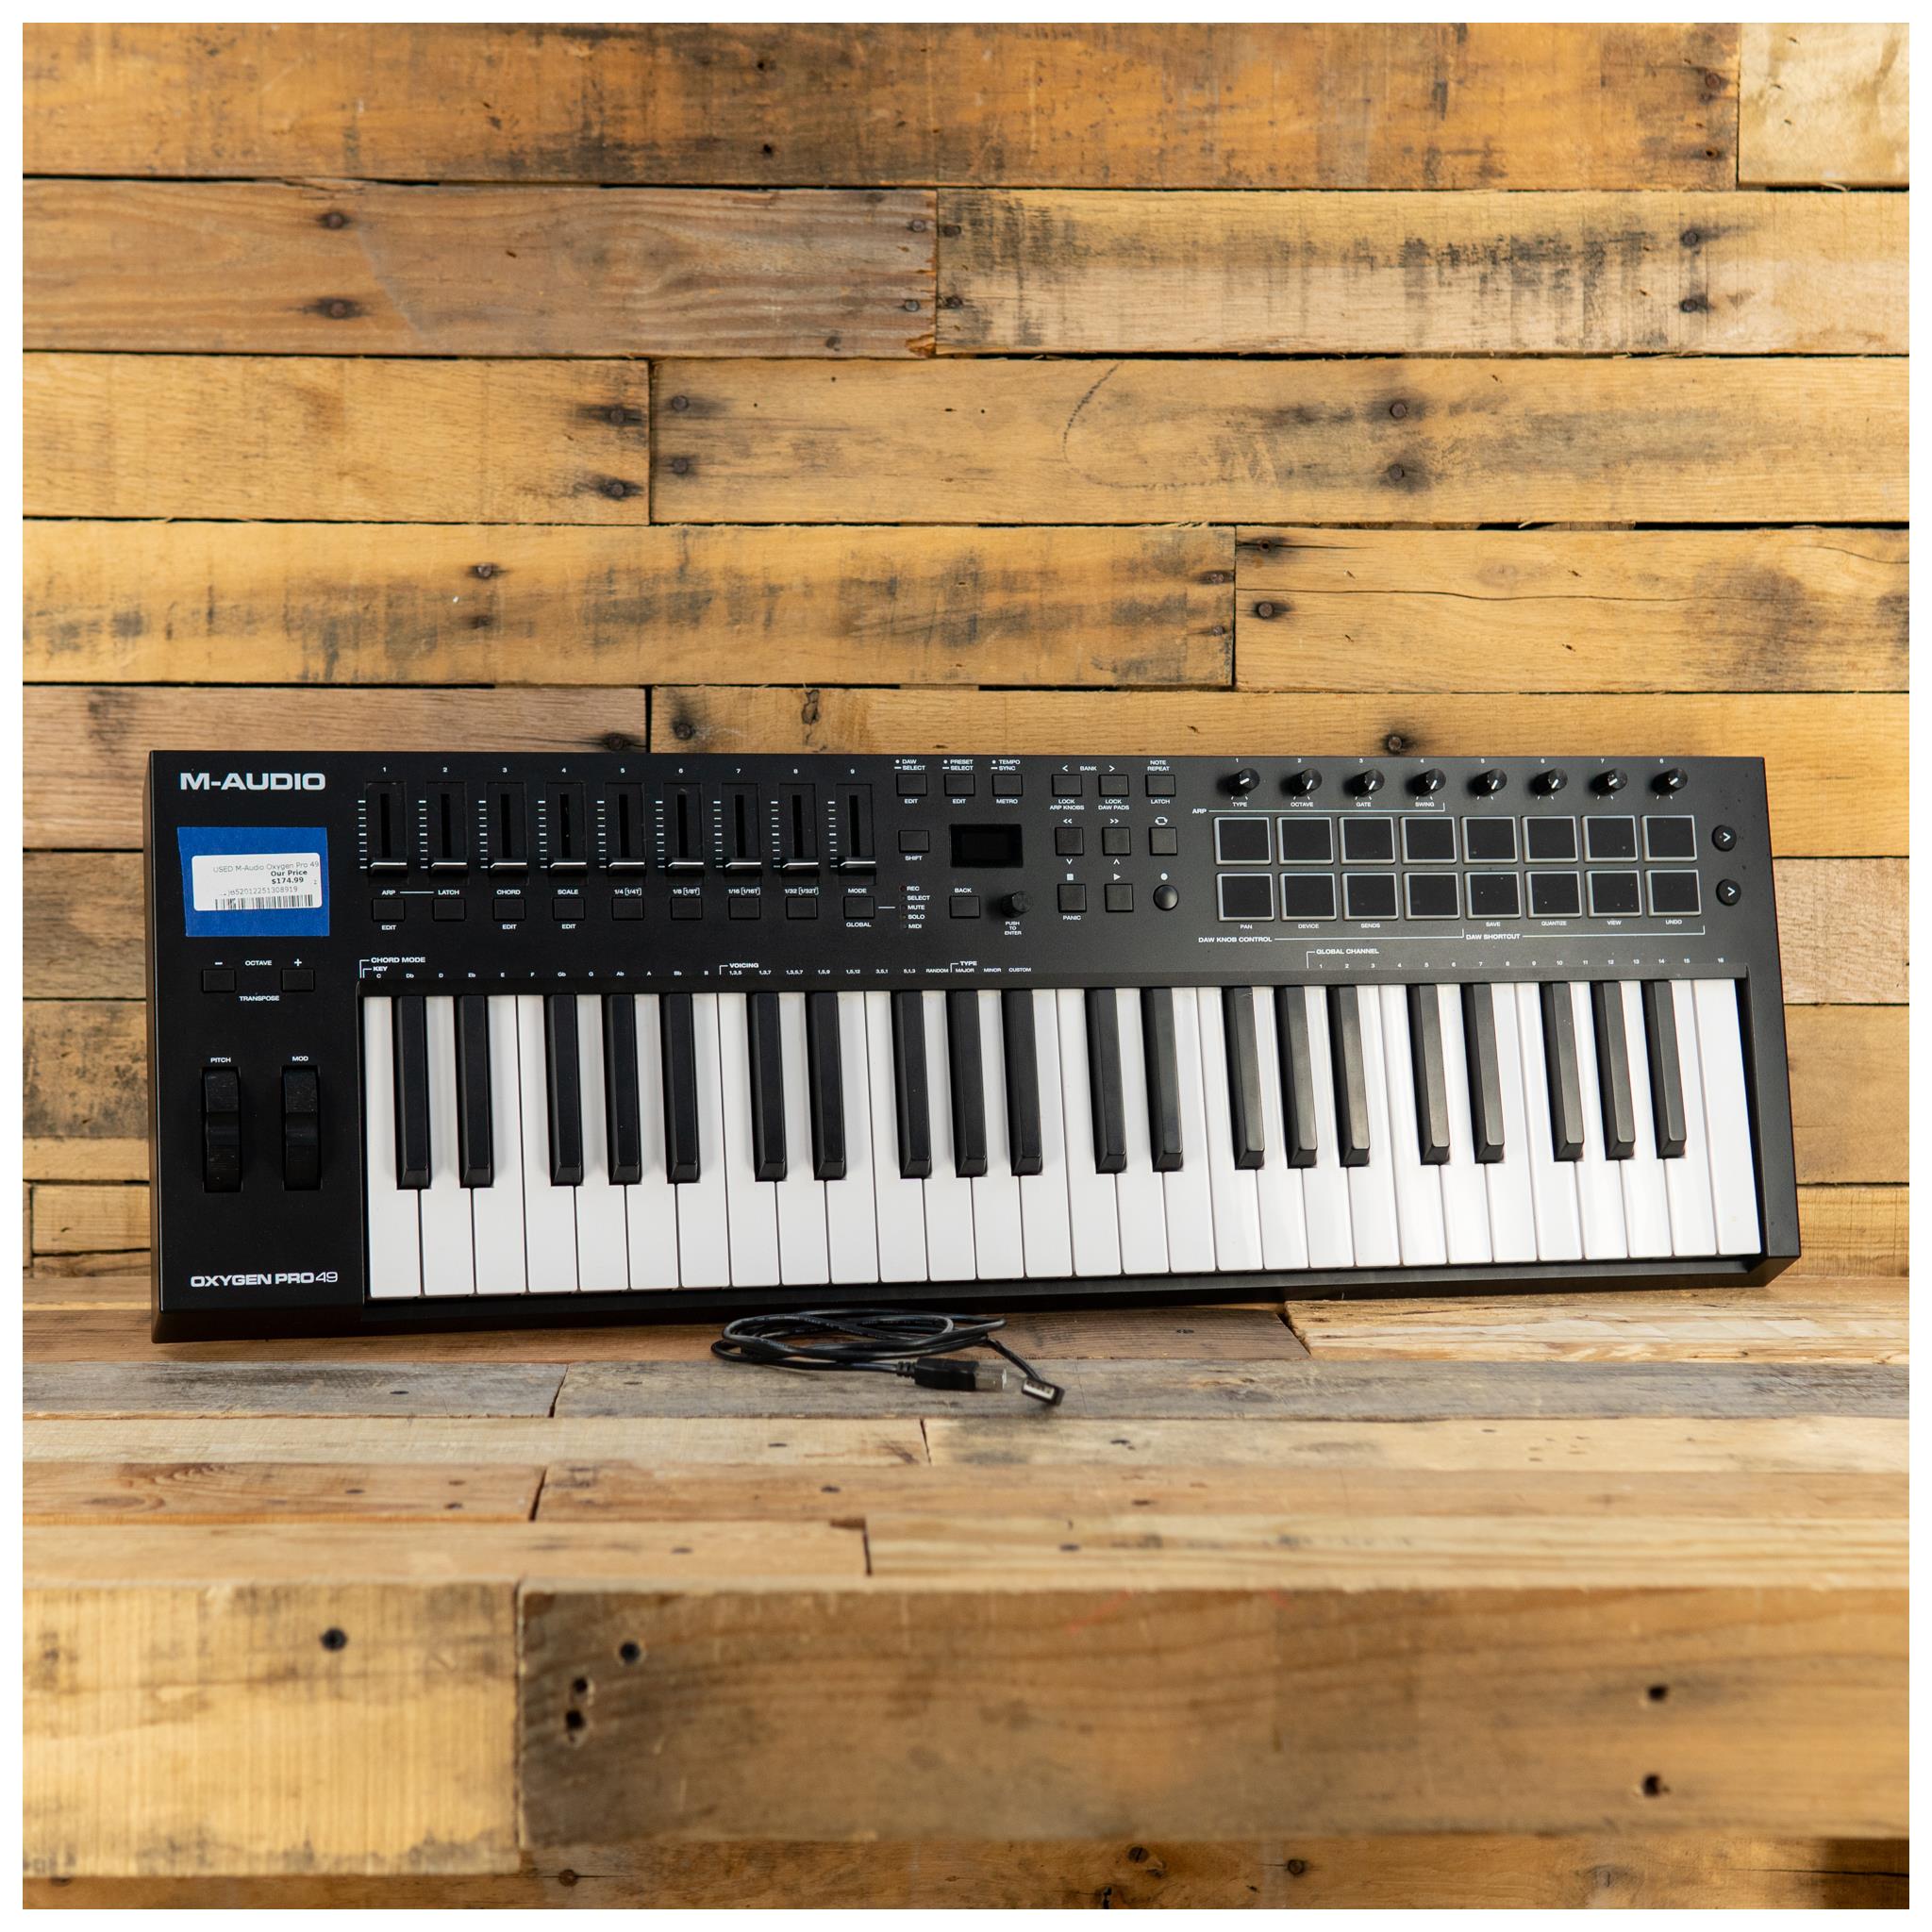 M-Audio Oxygen Pro 49 MIDI Keyboard/Controller - USED